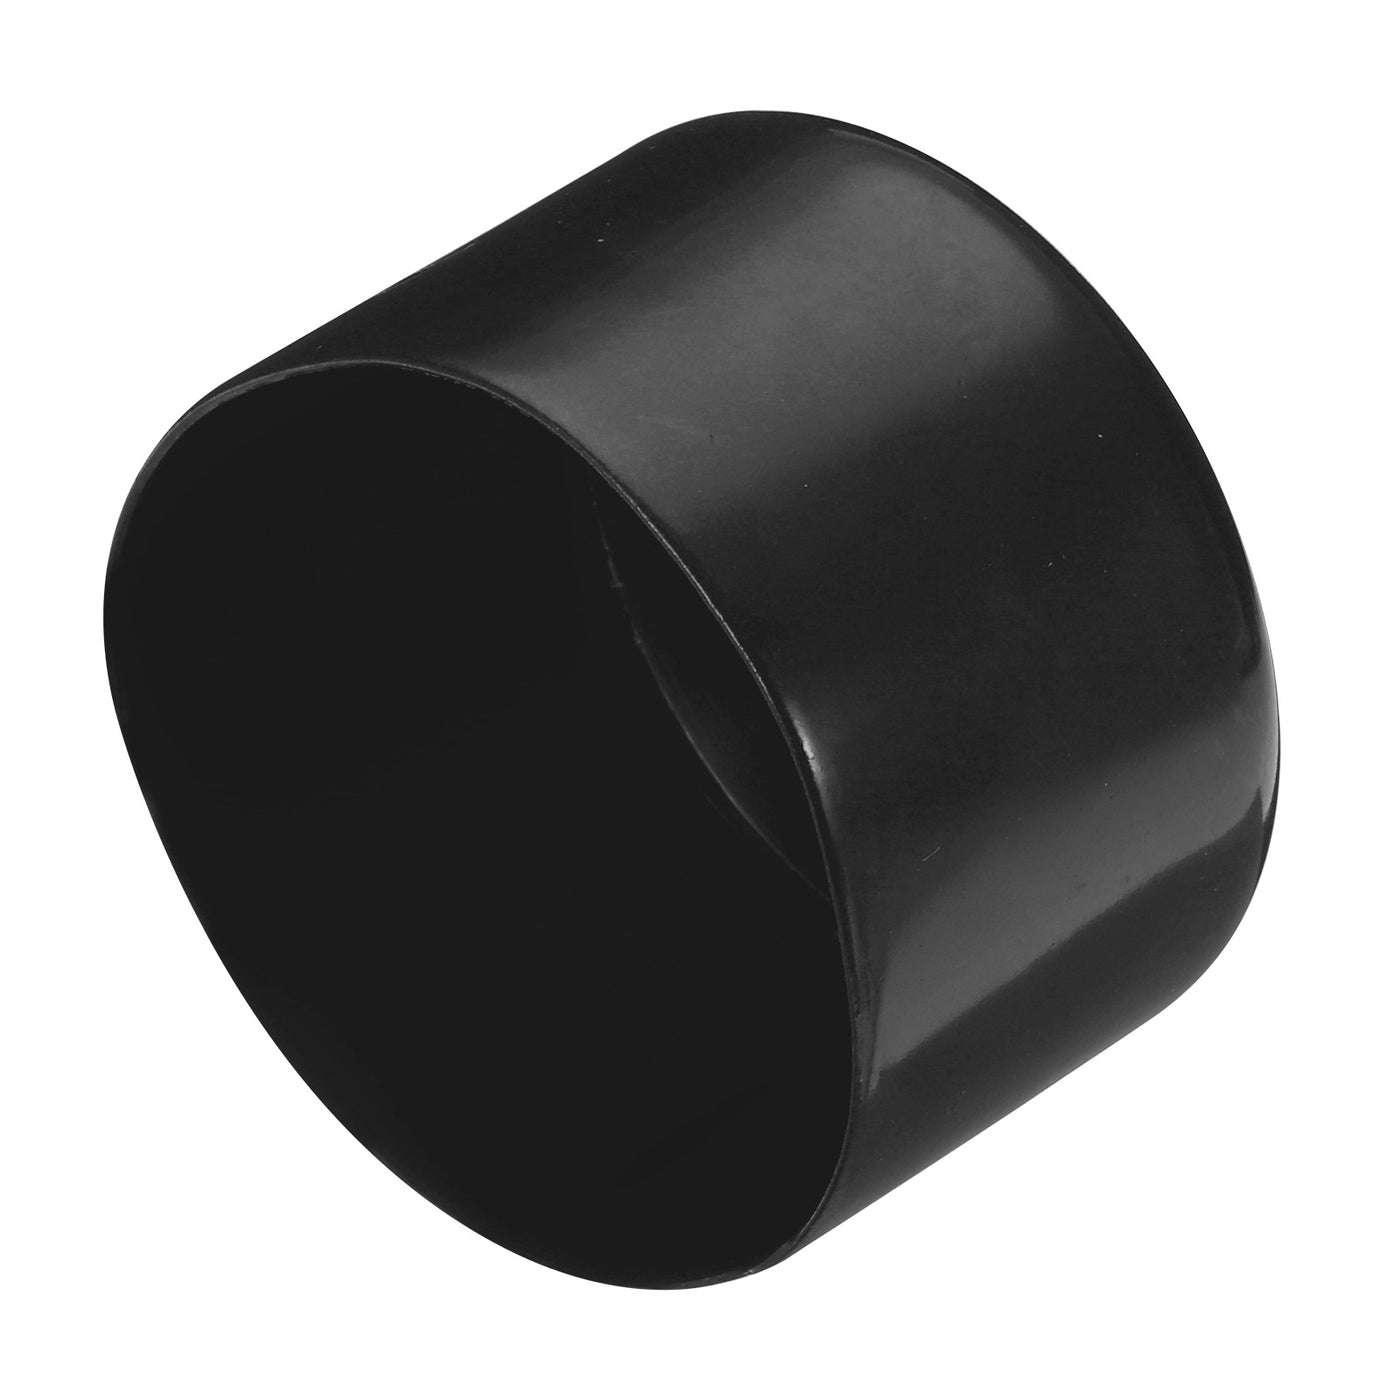 uxcell Uxcell 2pcs Rubber End Caps 85mm ID Vinyl Round Tube Bolt Cap Cover Screw Thread Protectors Black